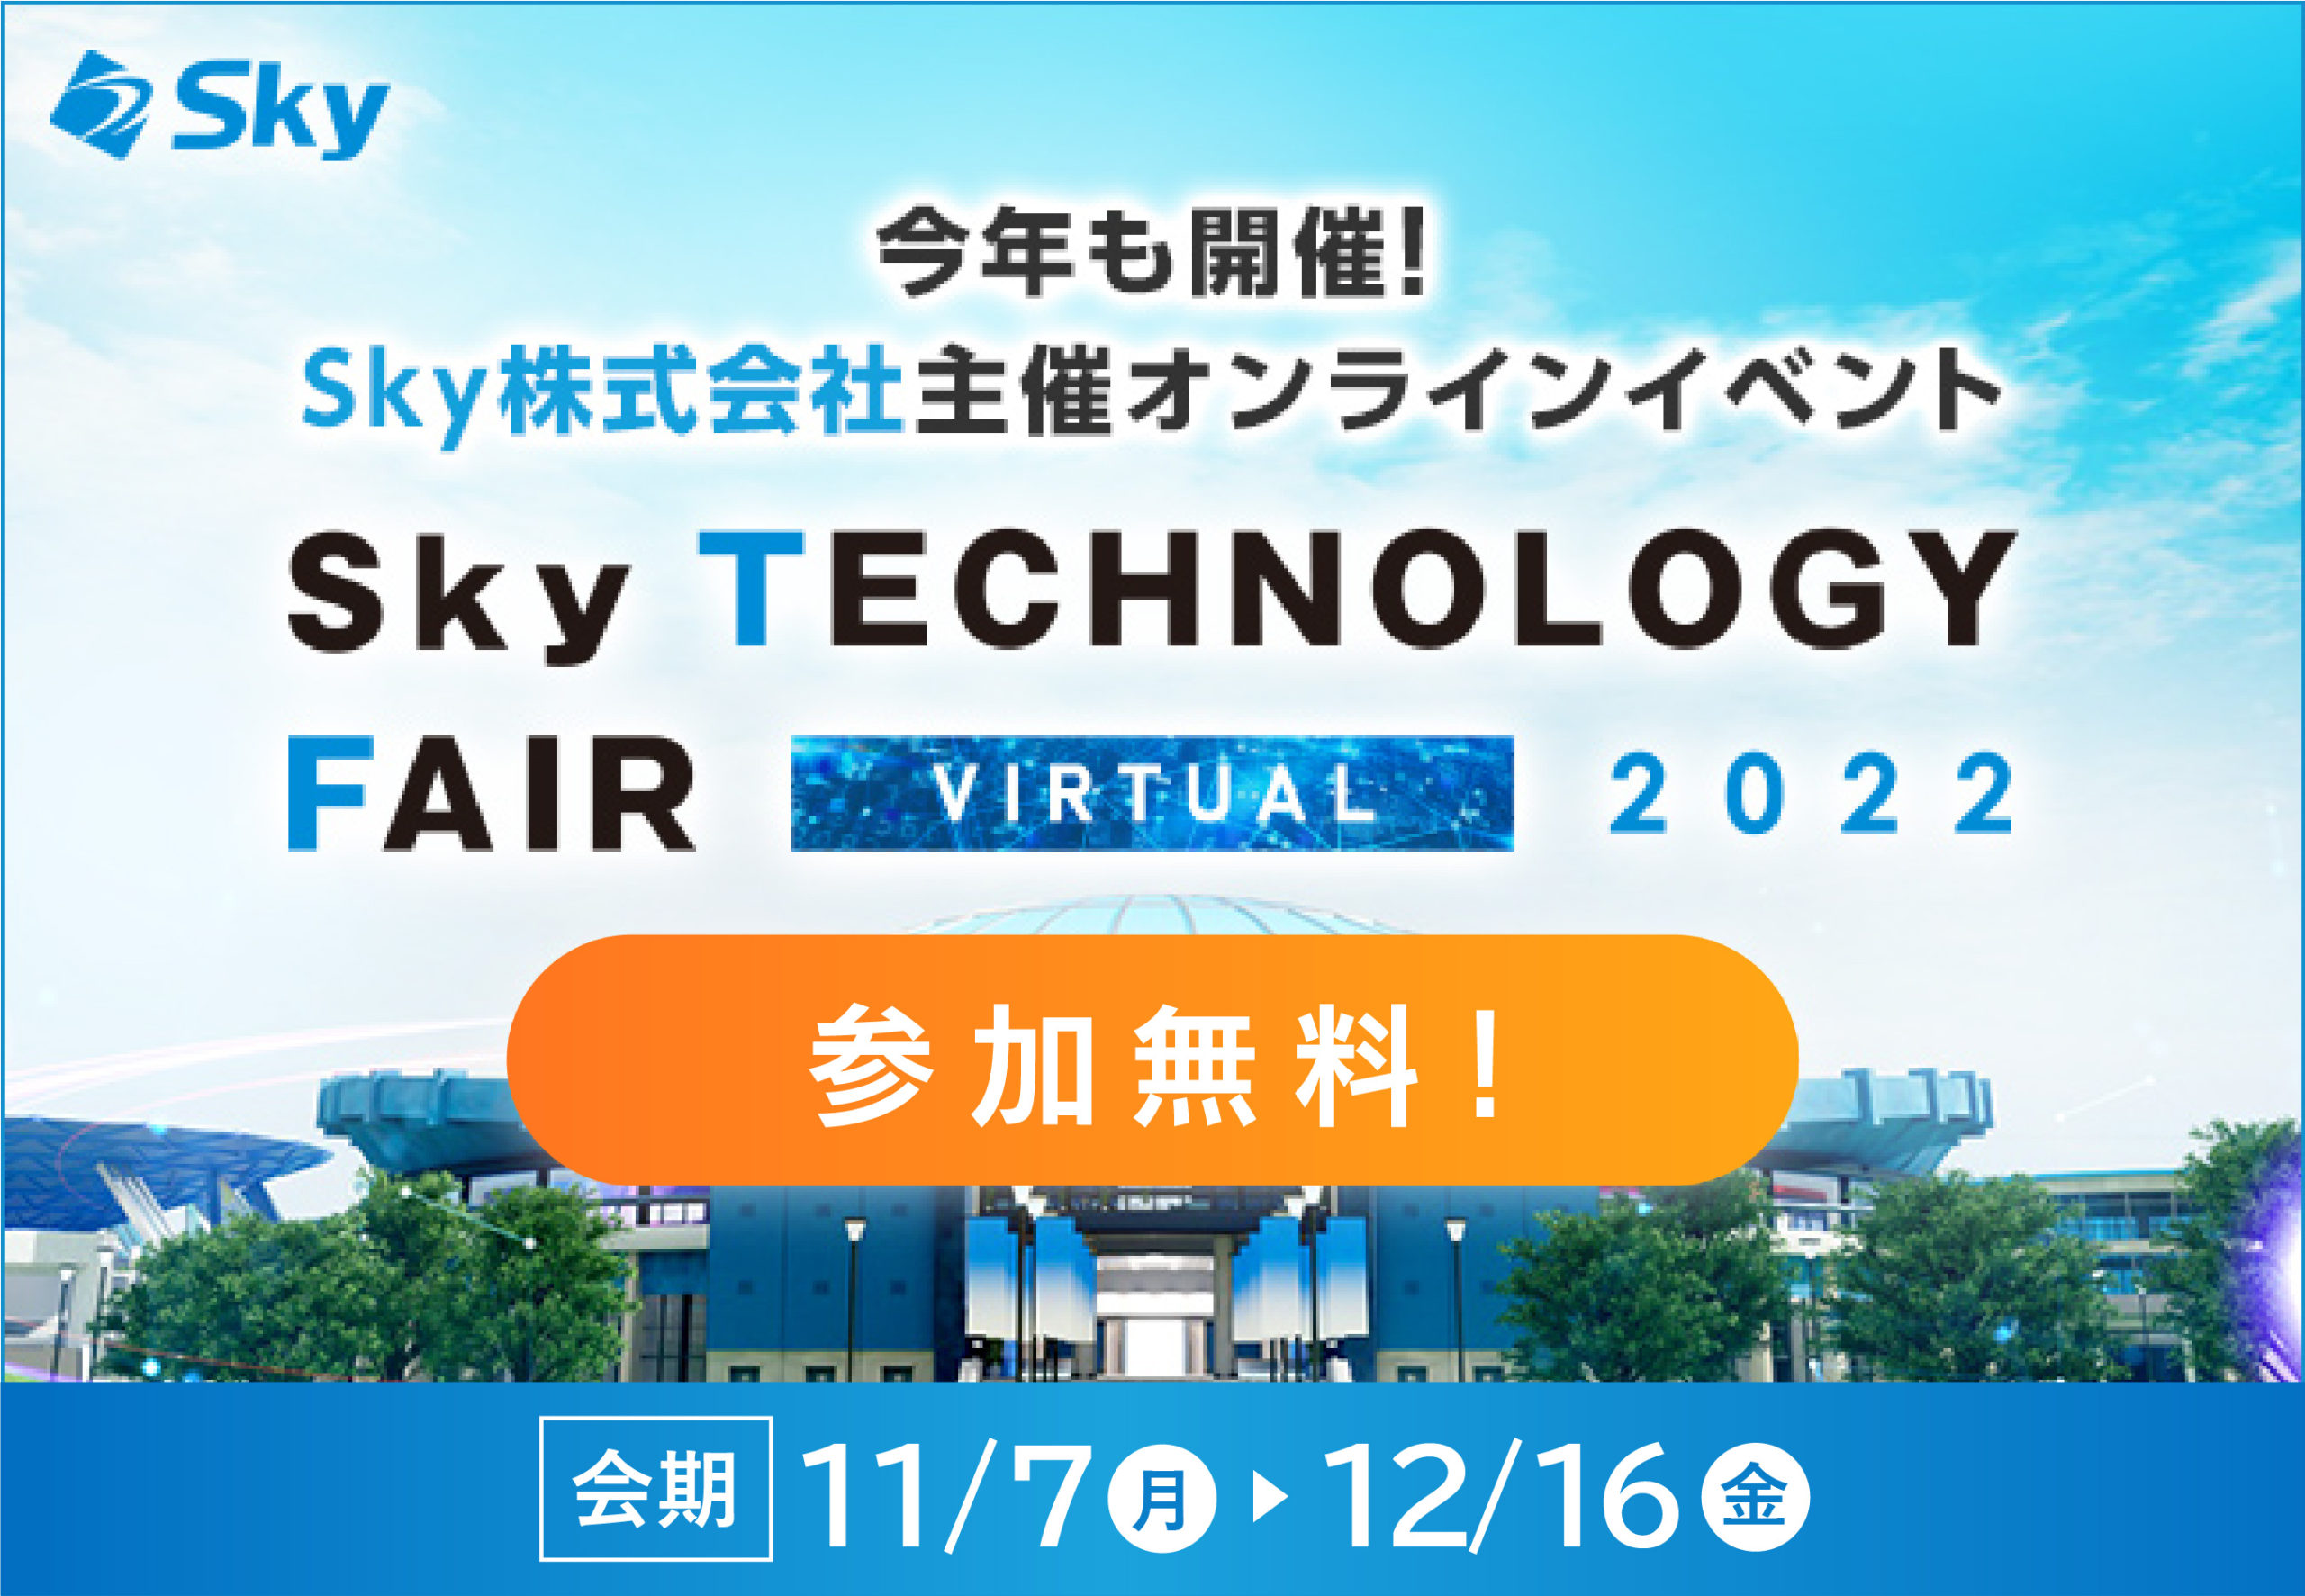 「Sky Technology Fair Virtual 2022」バナー